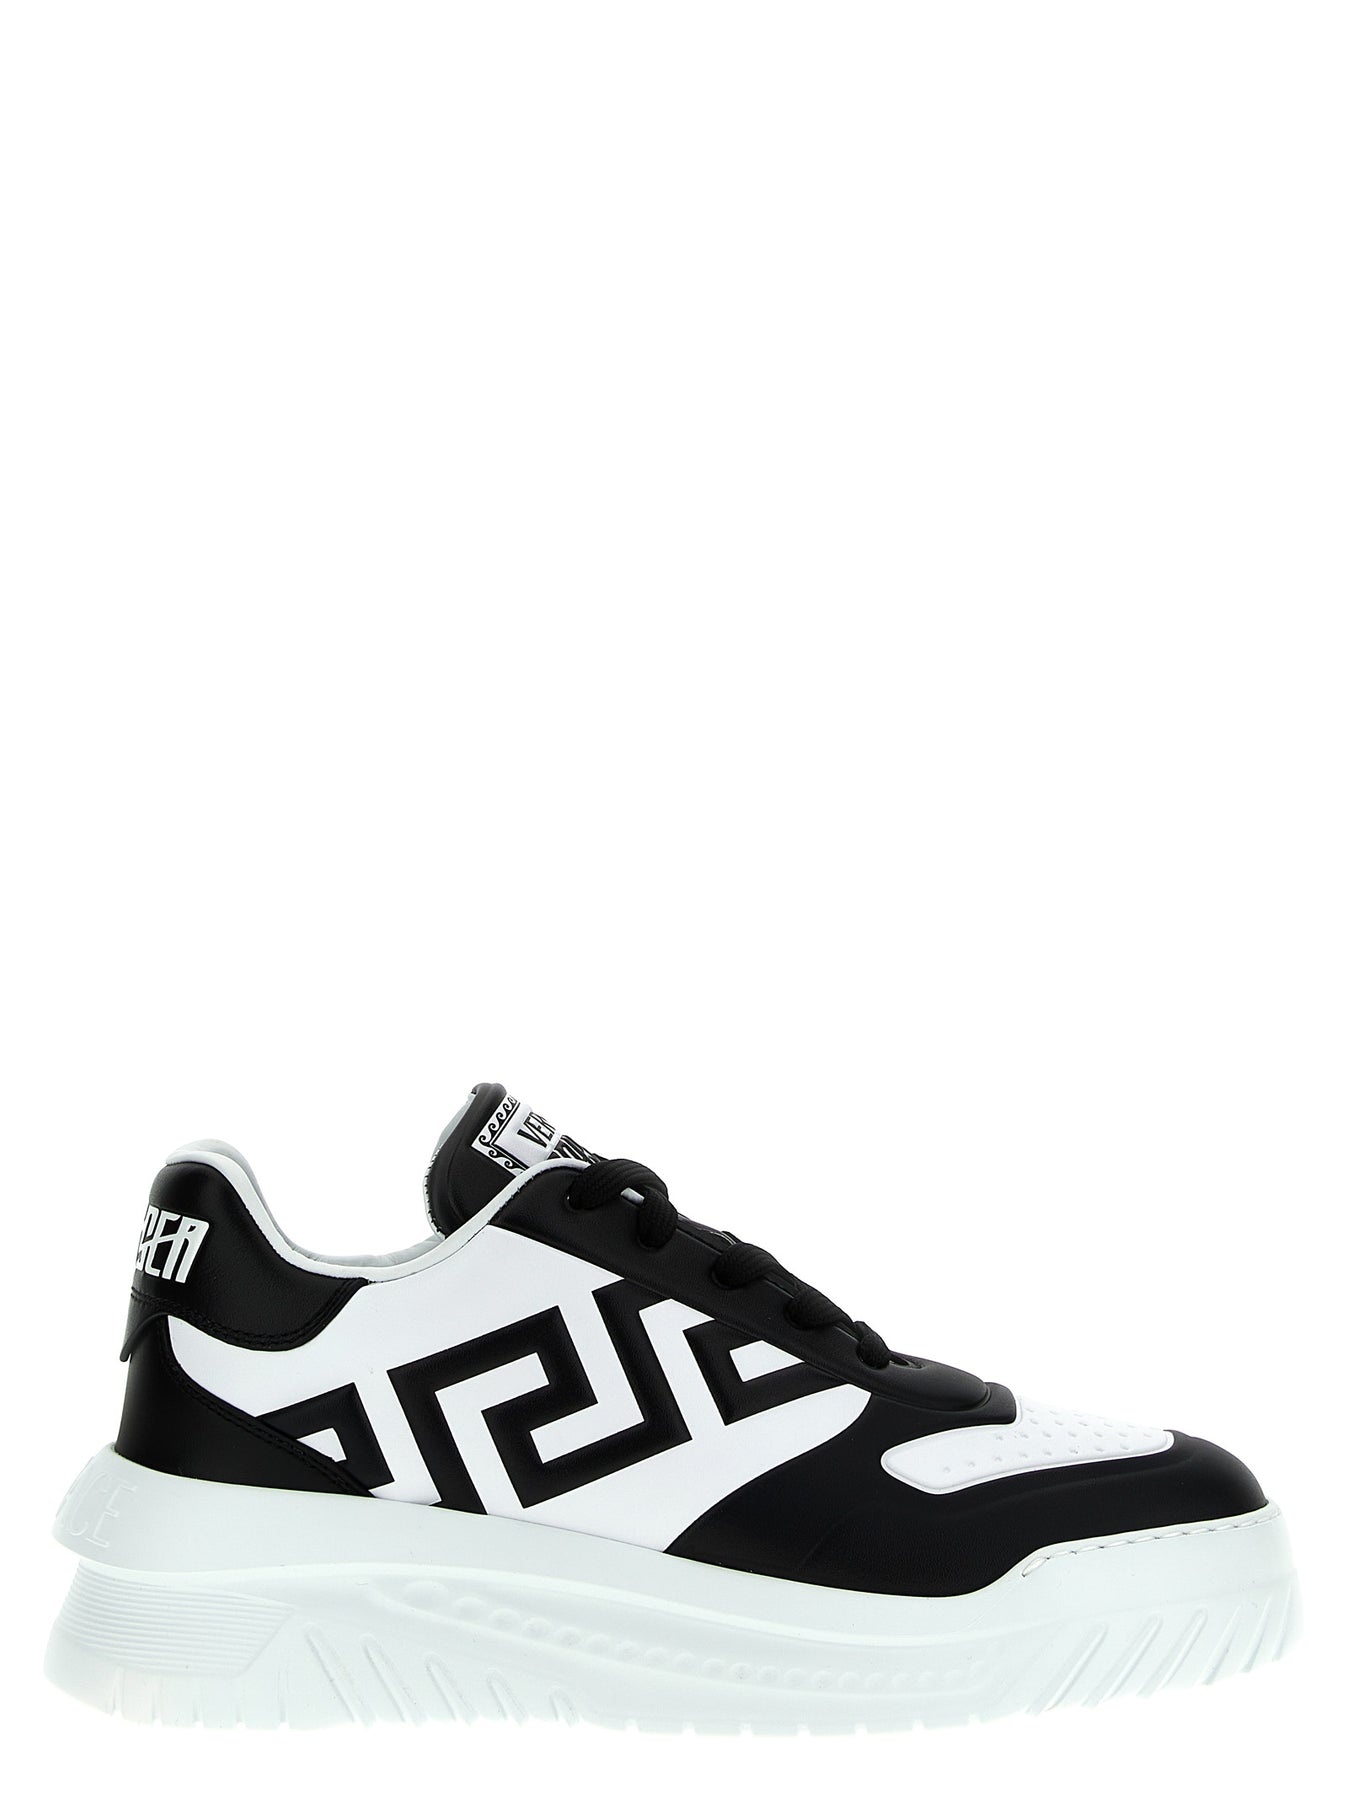 Odissea Greca Sneakers White/Black - 1